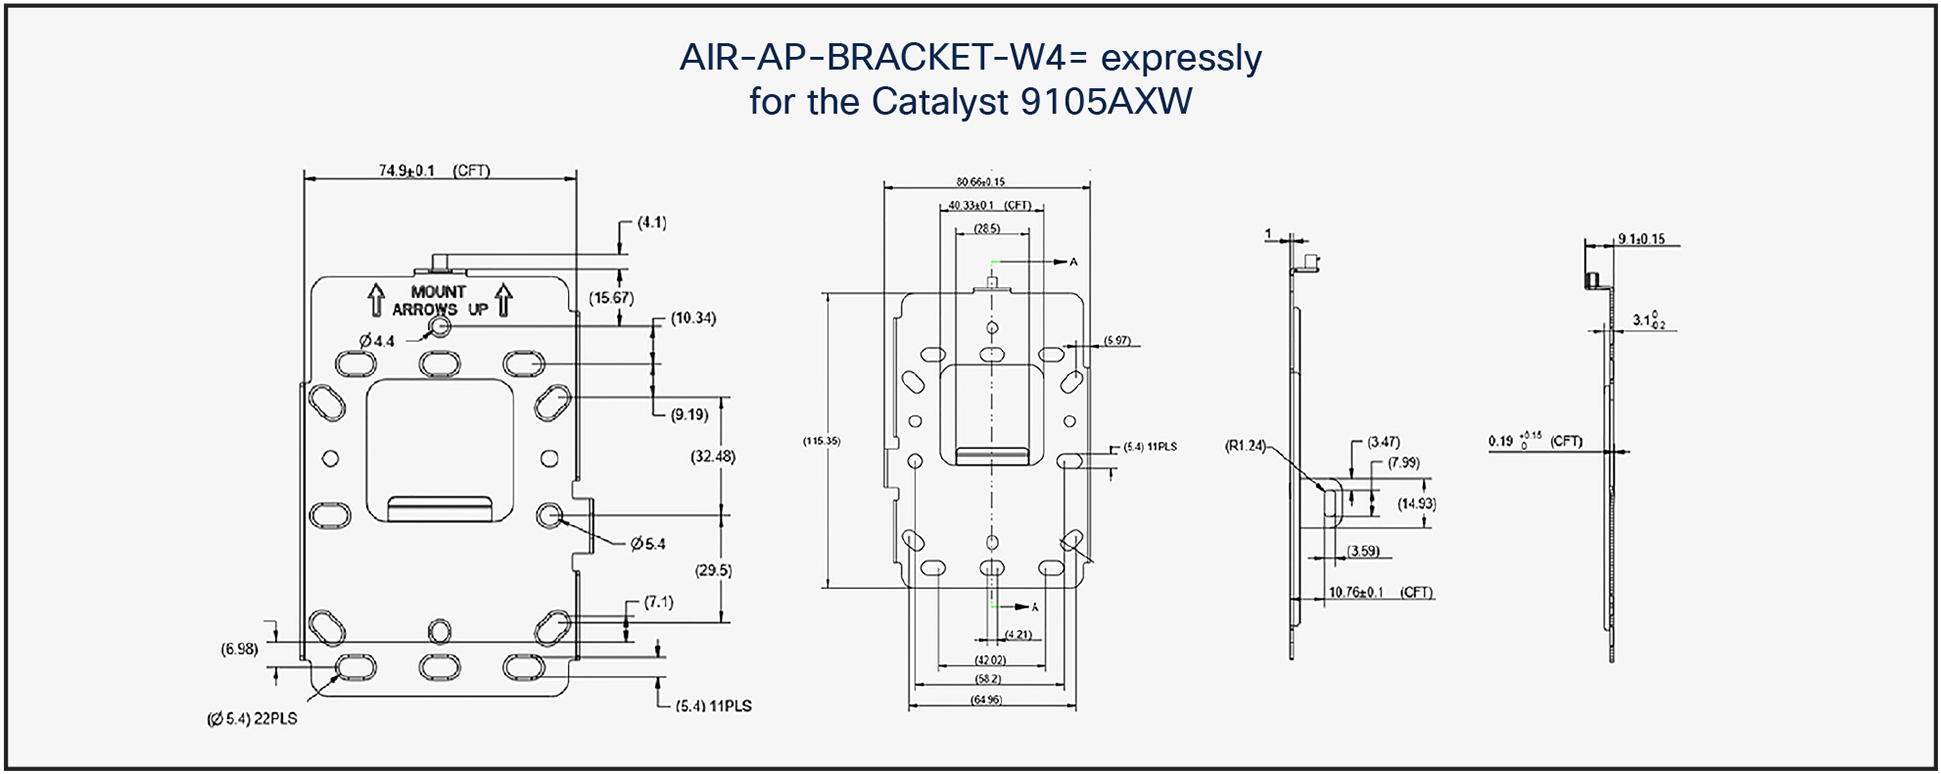 AIR-AP-BRACKET-W4 for Catalyst 9105AXW